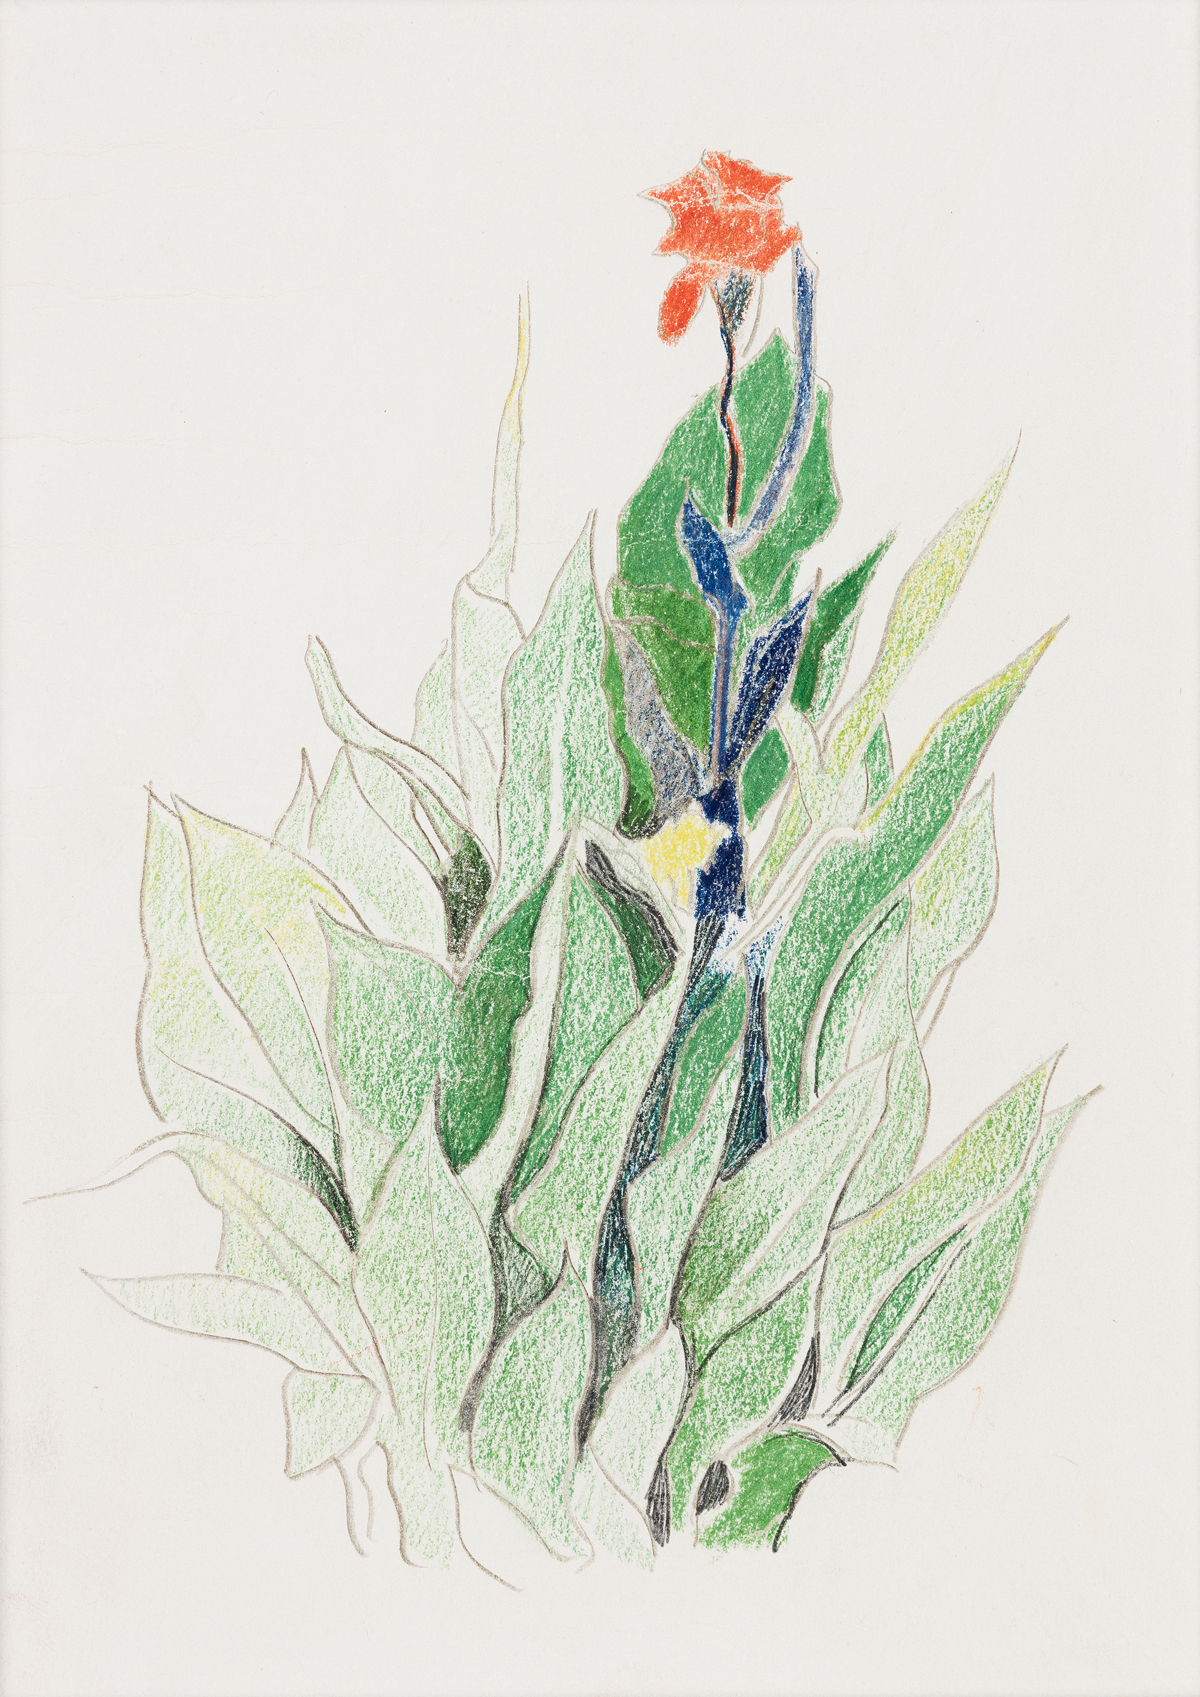 JOSEPH STELLA (1877 - 1946, AMERICAN) Red Canna Among Green Leaves.